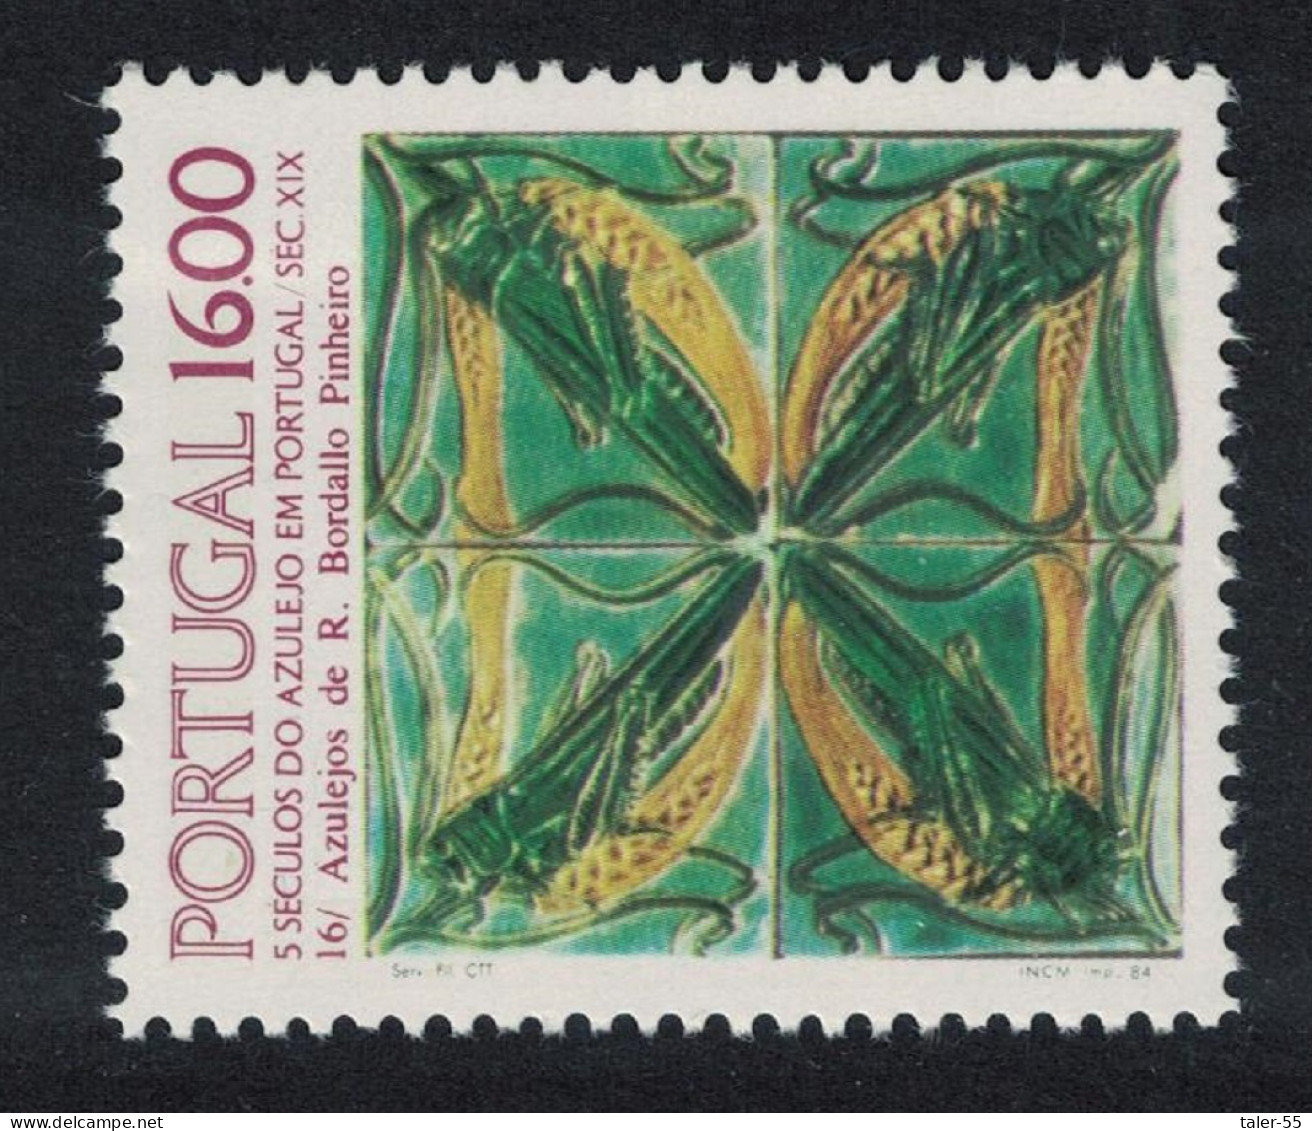 Portugal Tiles 16th Series 1984 MNH SG#1976 - Nuovi